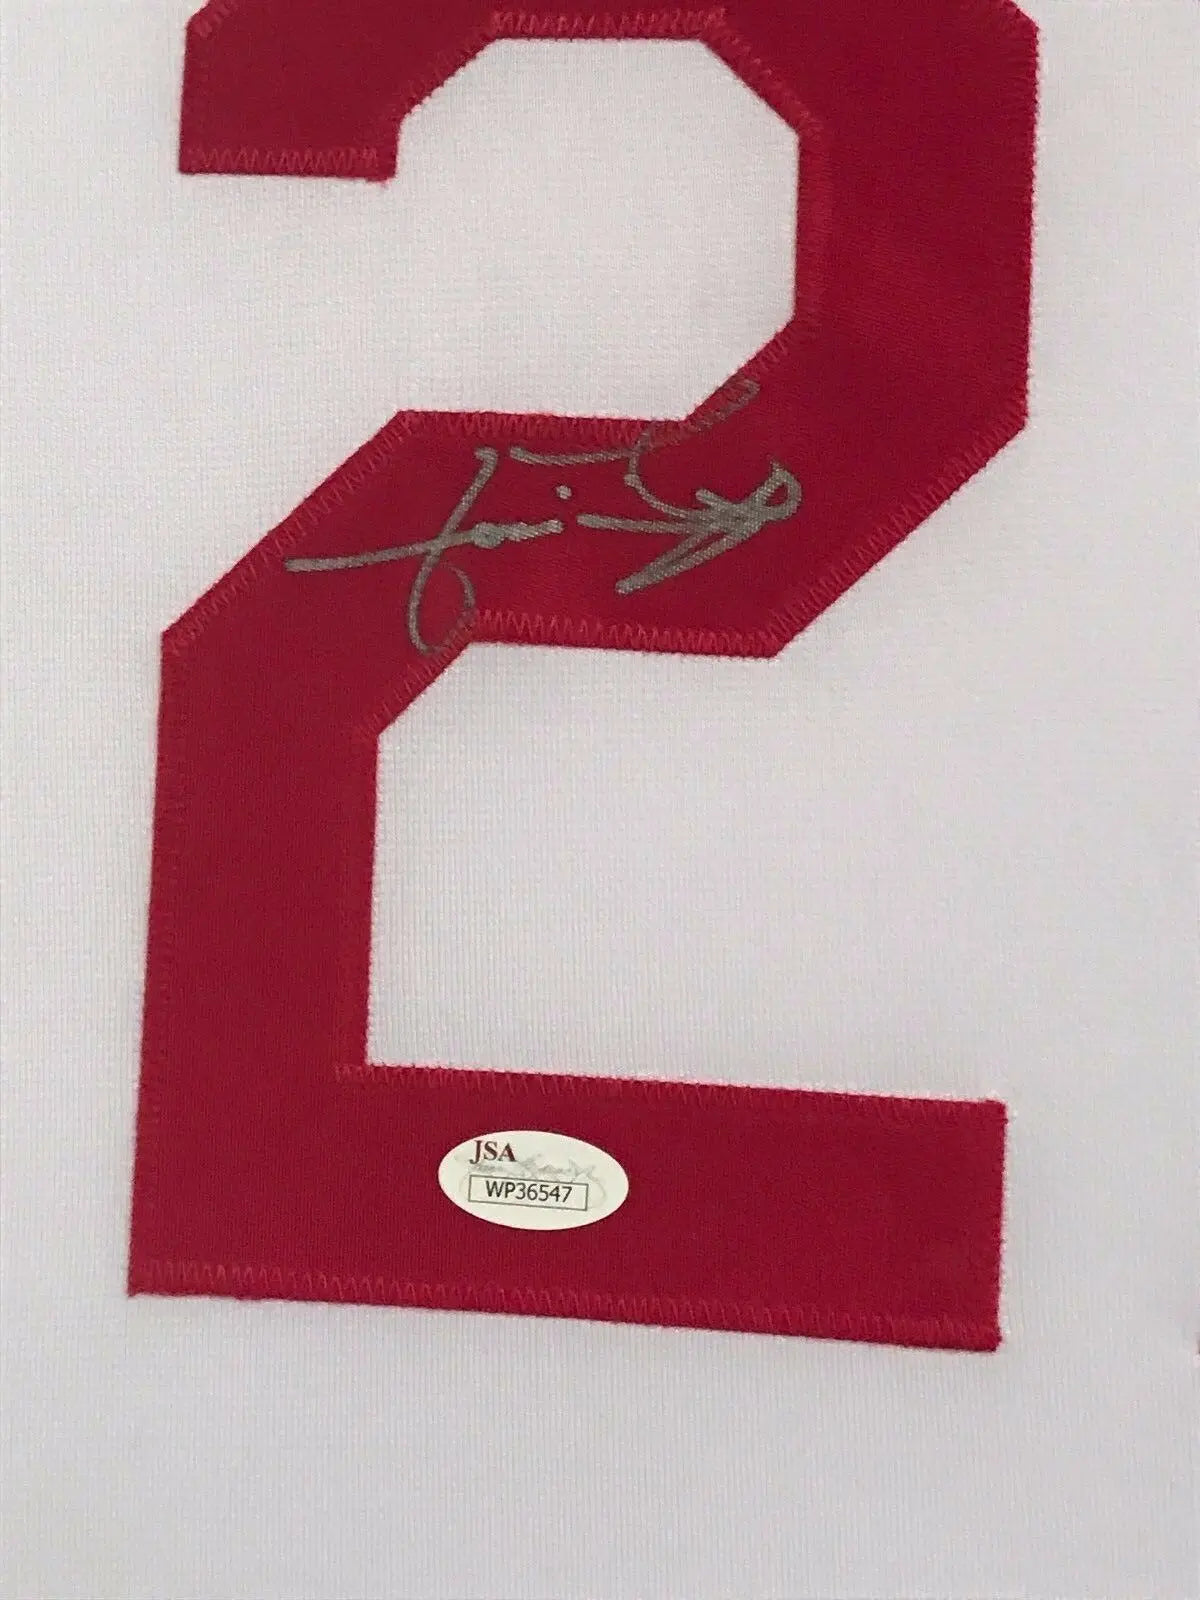 MVP Authentics Framed Jose Rijo Autographed Signed Cincinnati Reds Jersey Jsa Coa 450 sports jersey framing , jersey framing